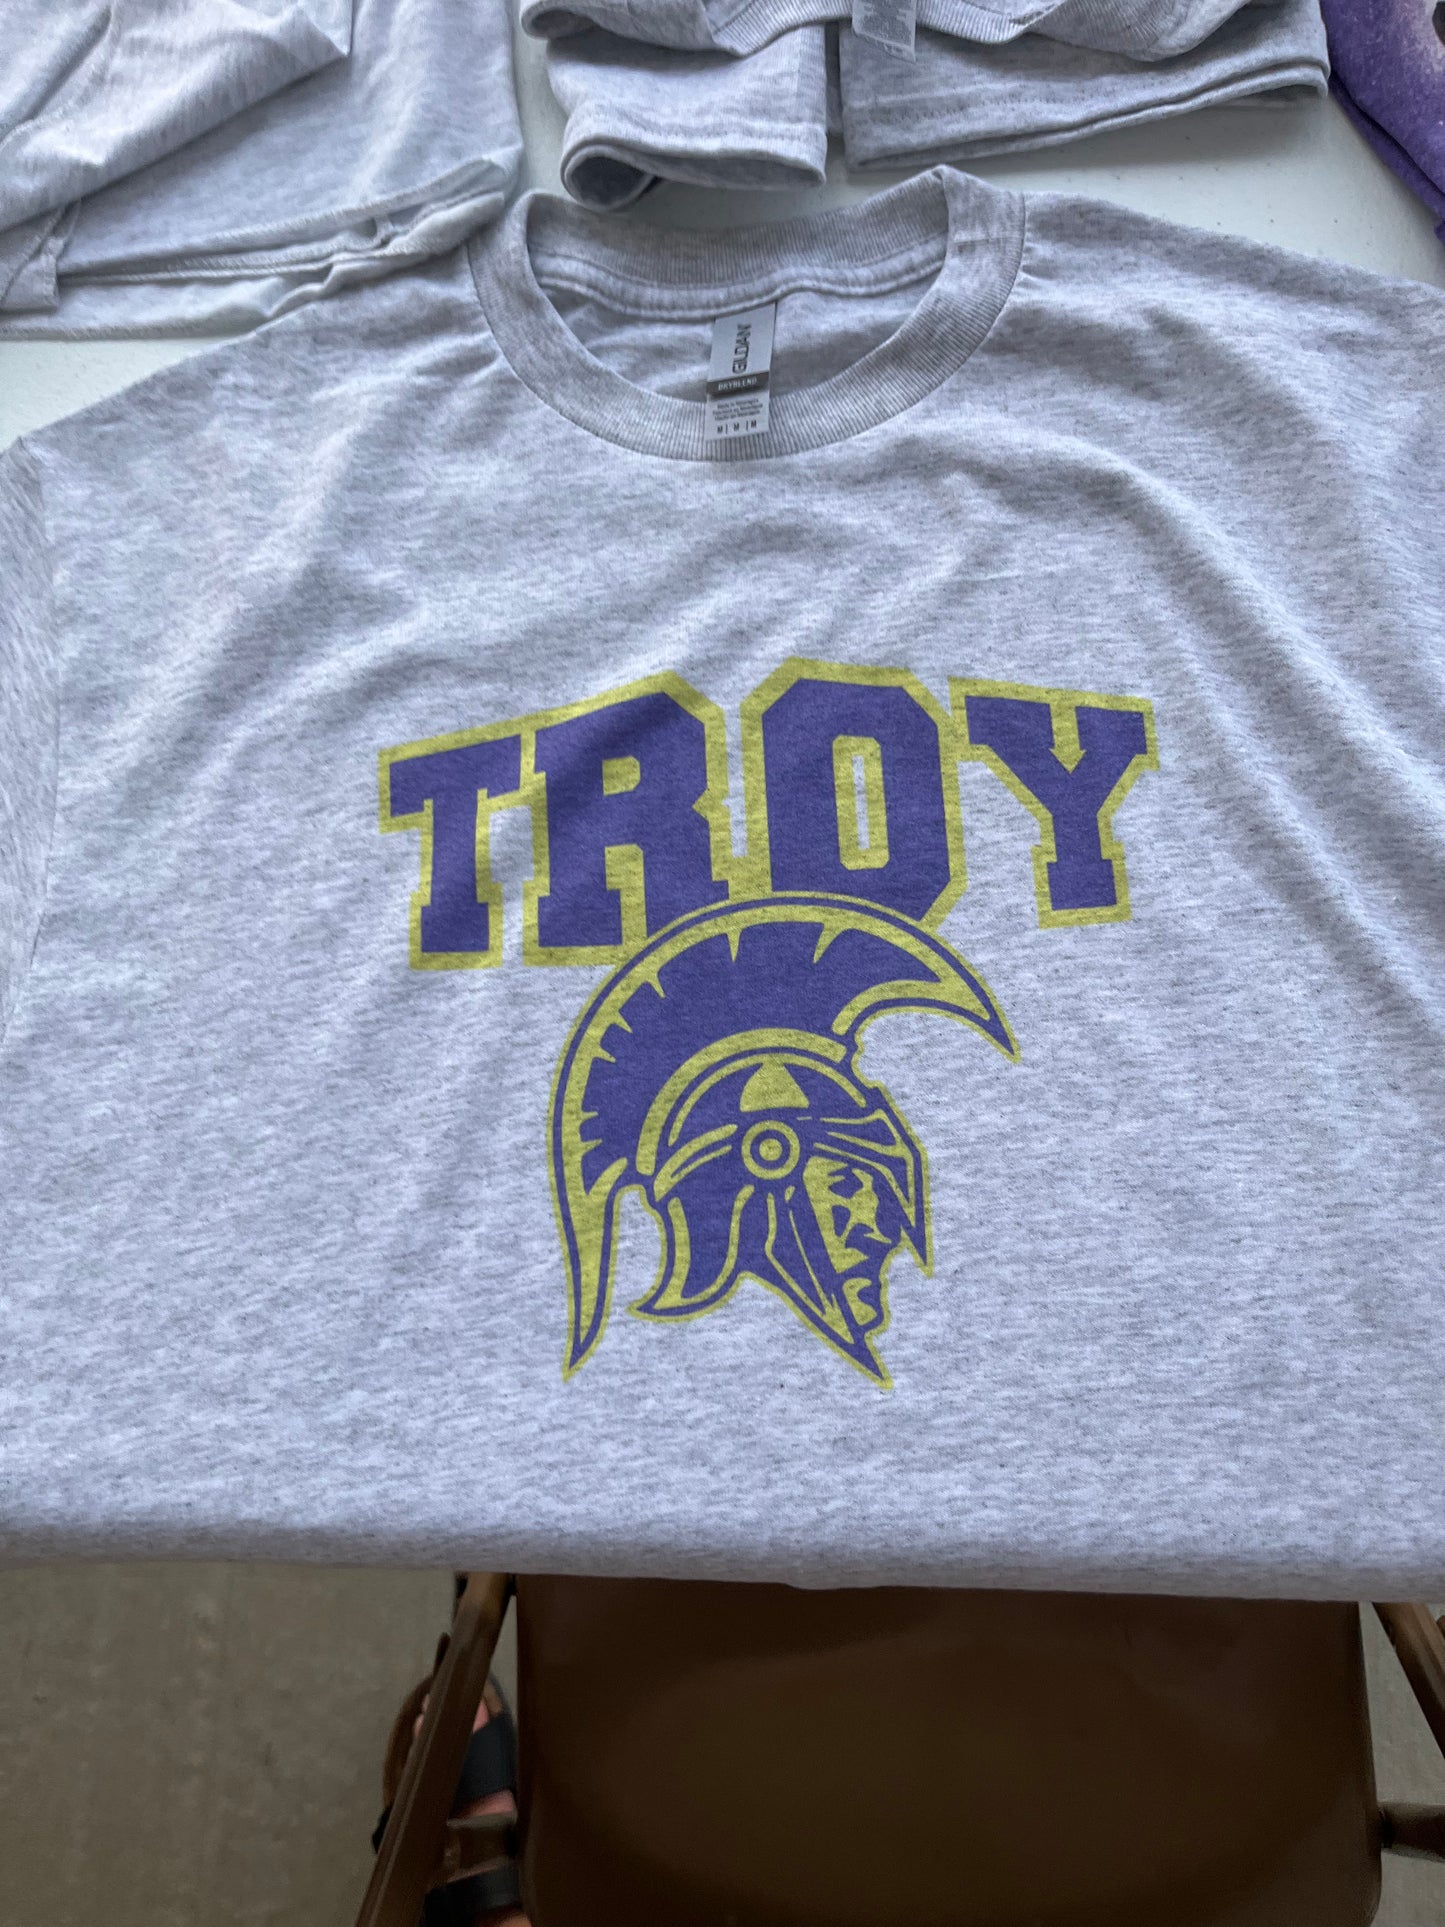 Troy with Trojan head